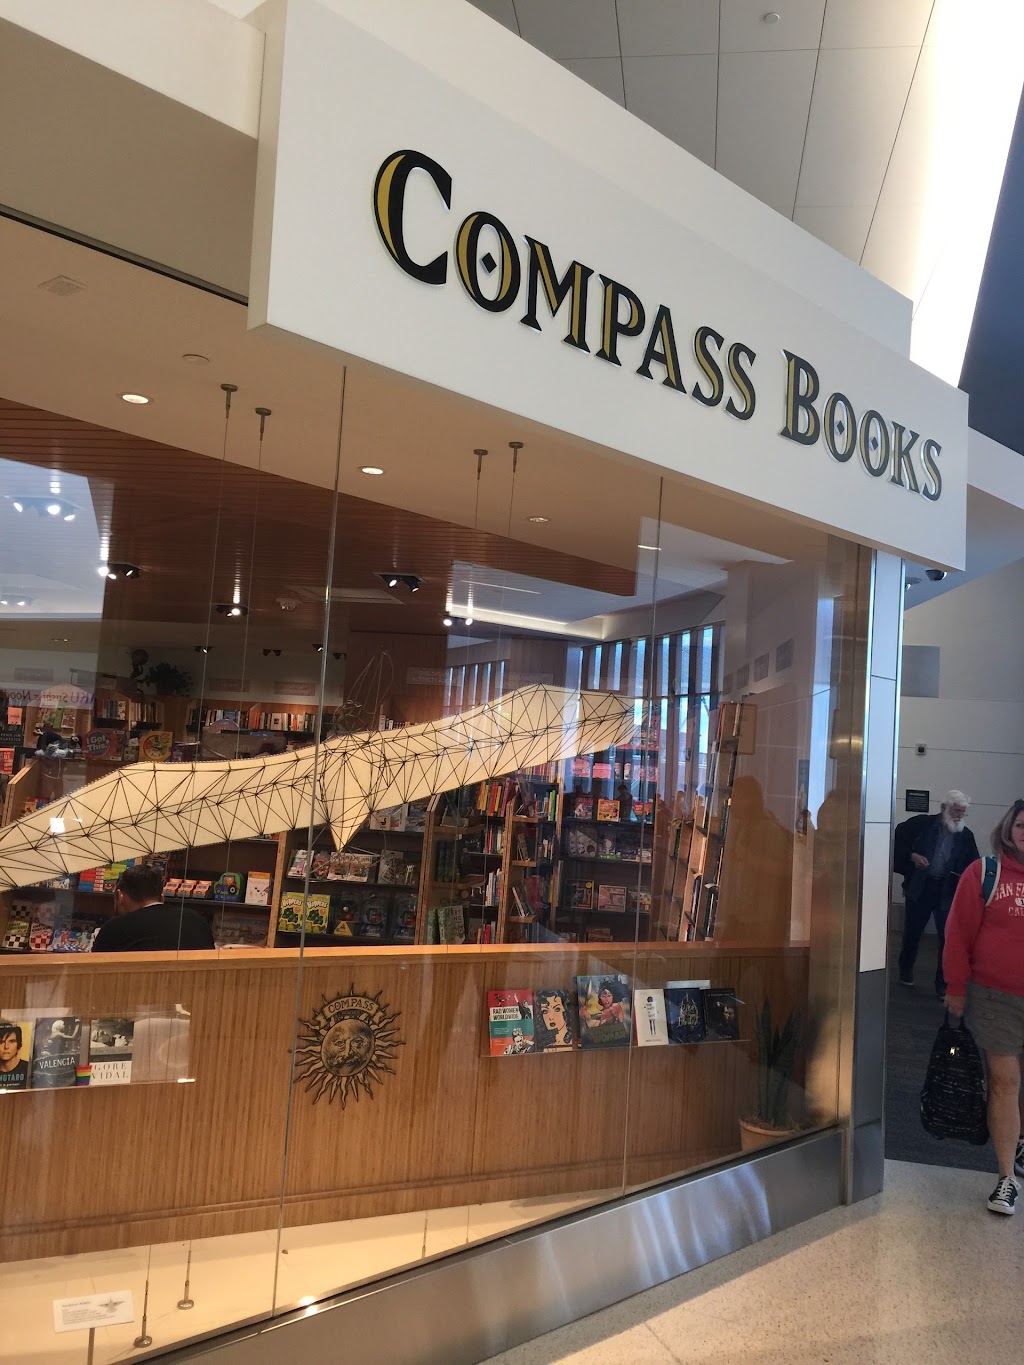 Compass Books | Terminal 3, Boarding Area F, Gate 71, 1390 El Camino Real, San Francisco, CA 94128 | Phone: (650) 821-2326